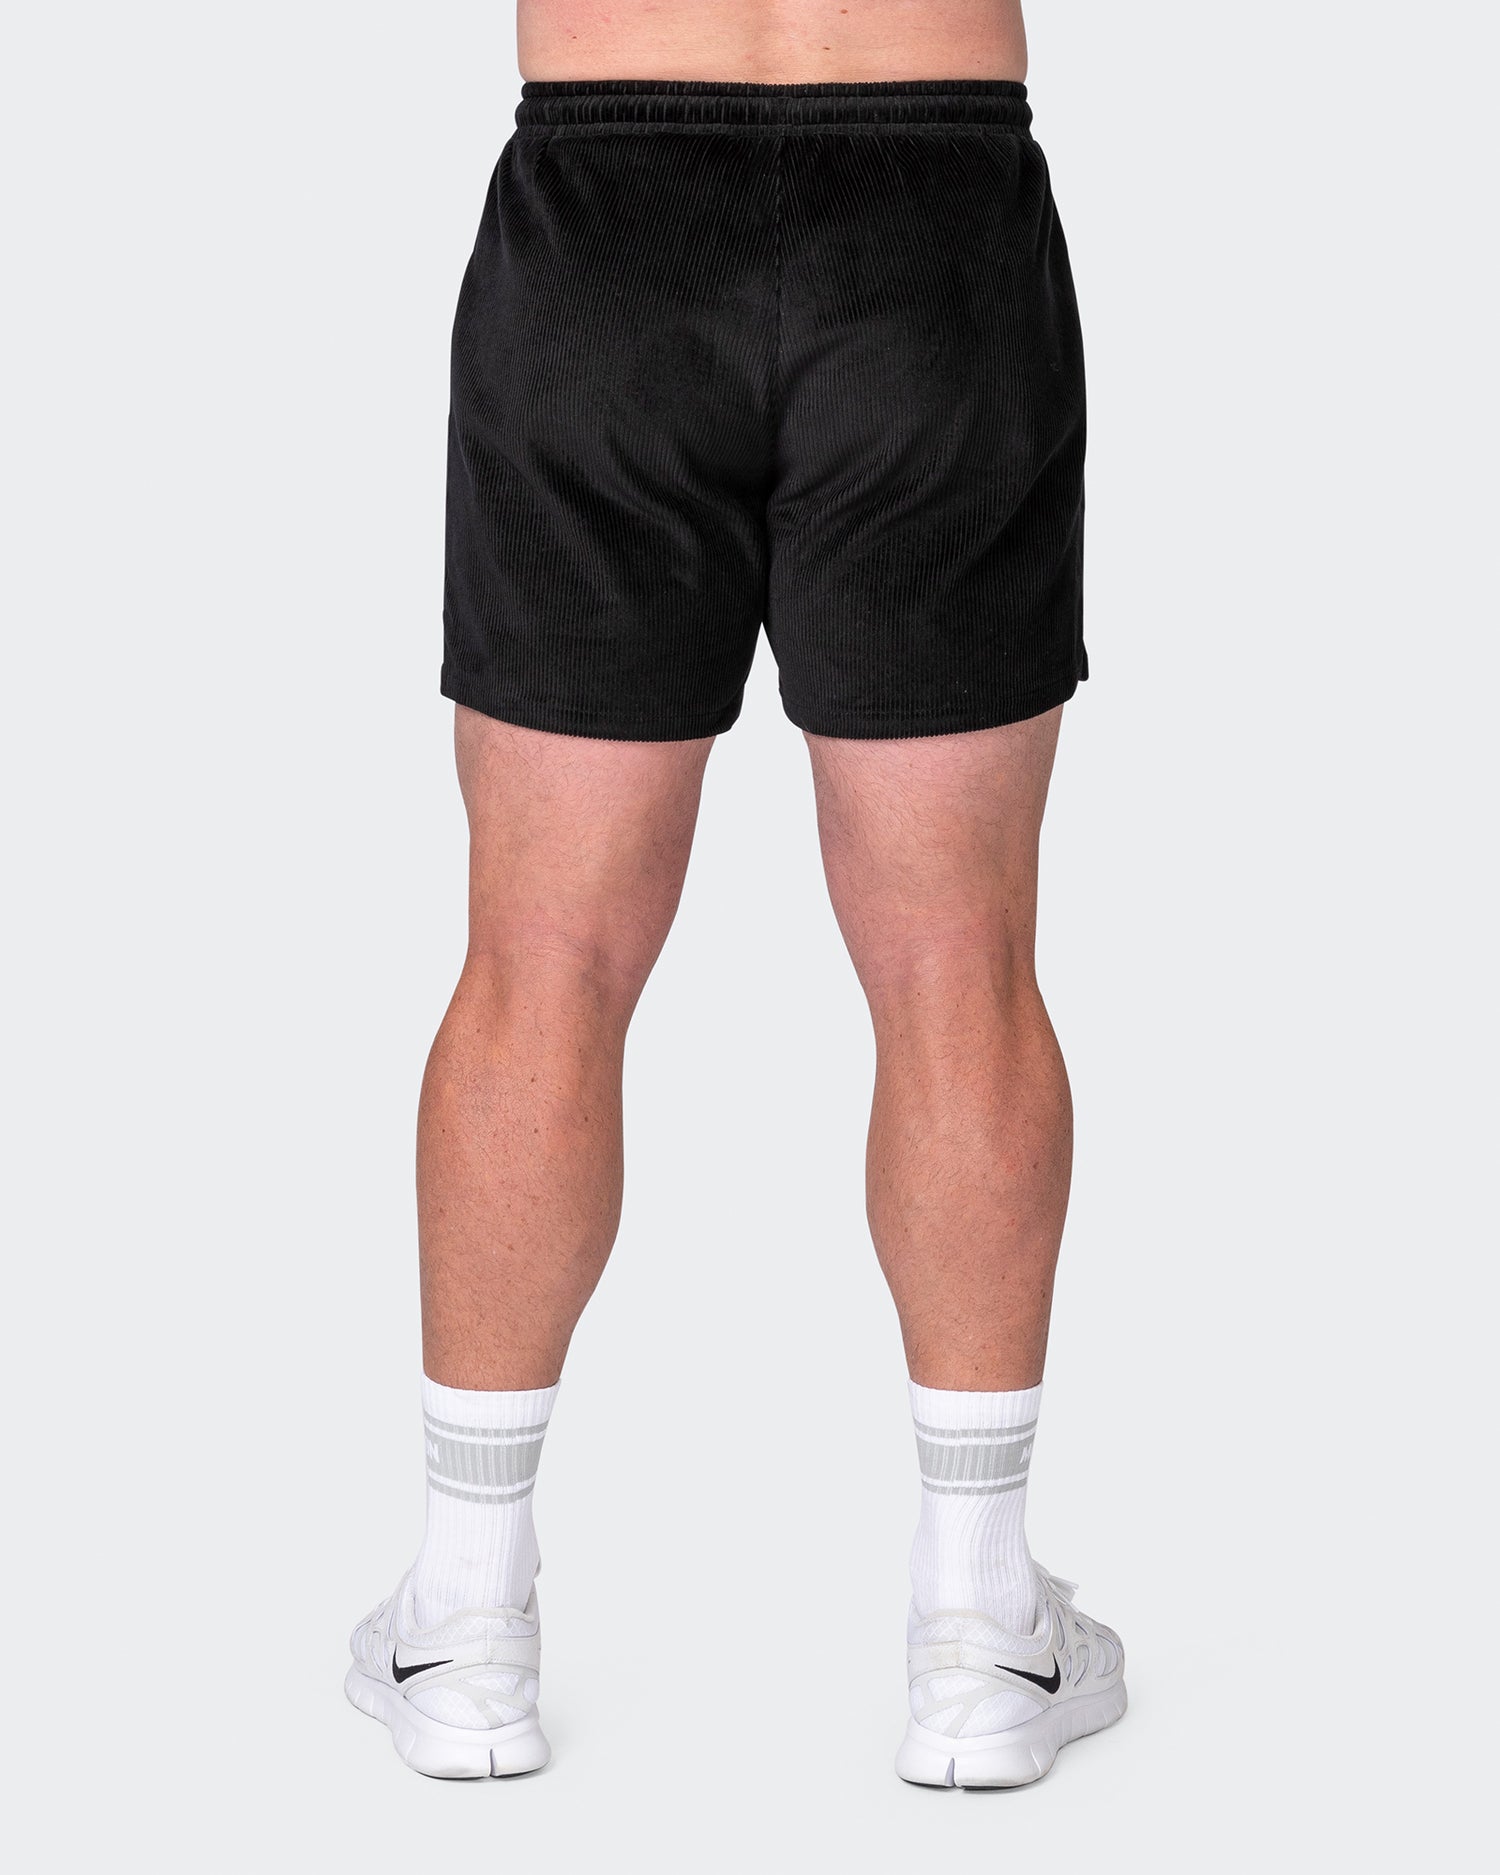 Daily Corduroy Shorts - Black